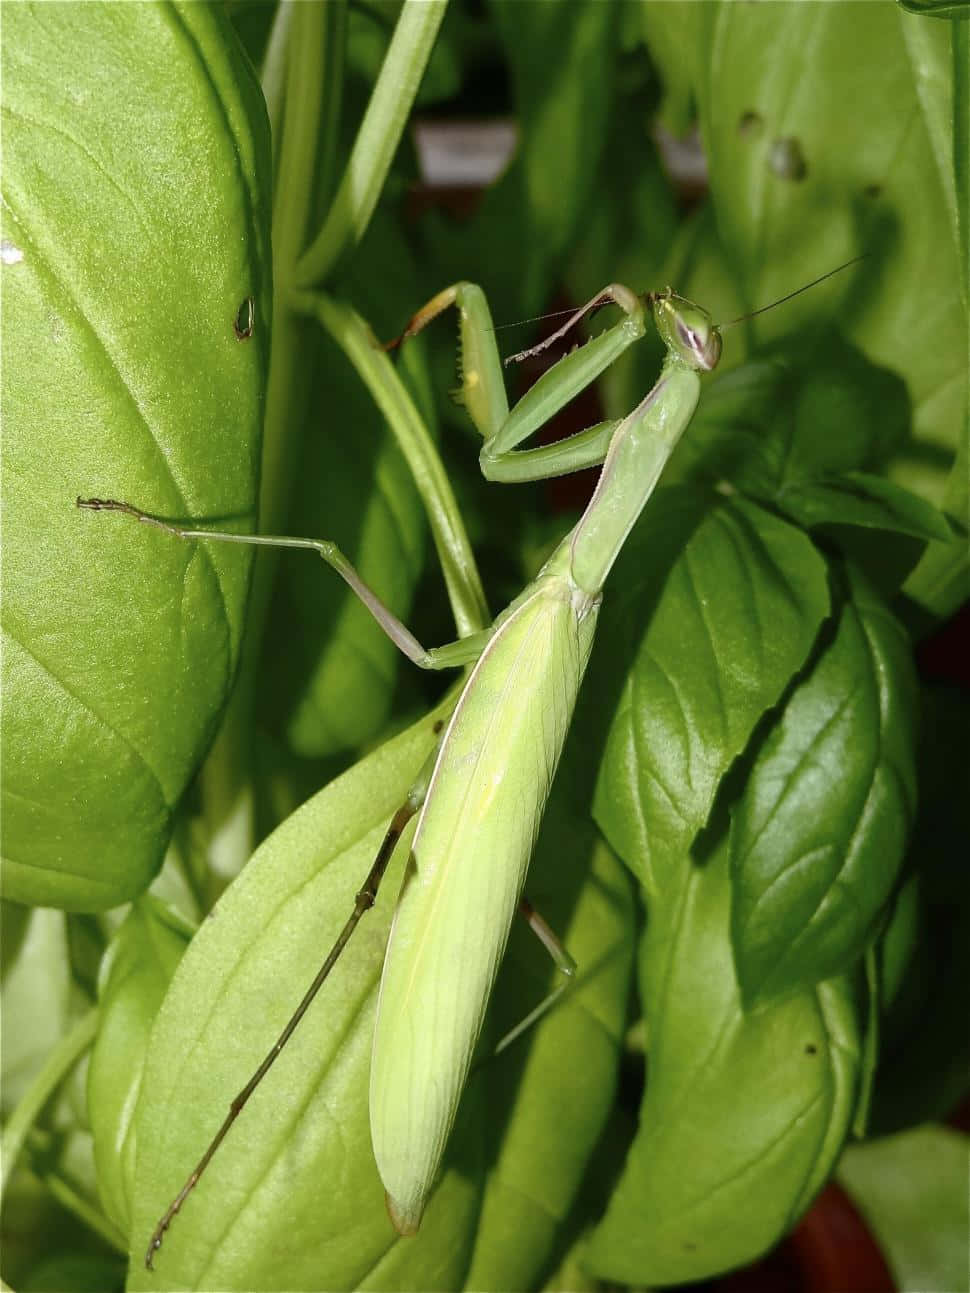 A Vibrant Green Grasshopper Close-up